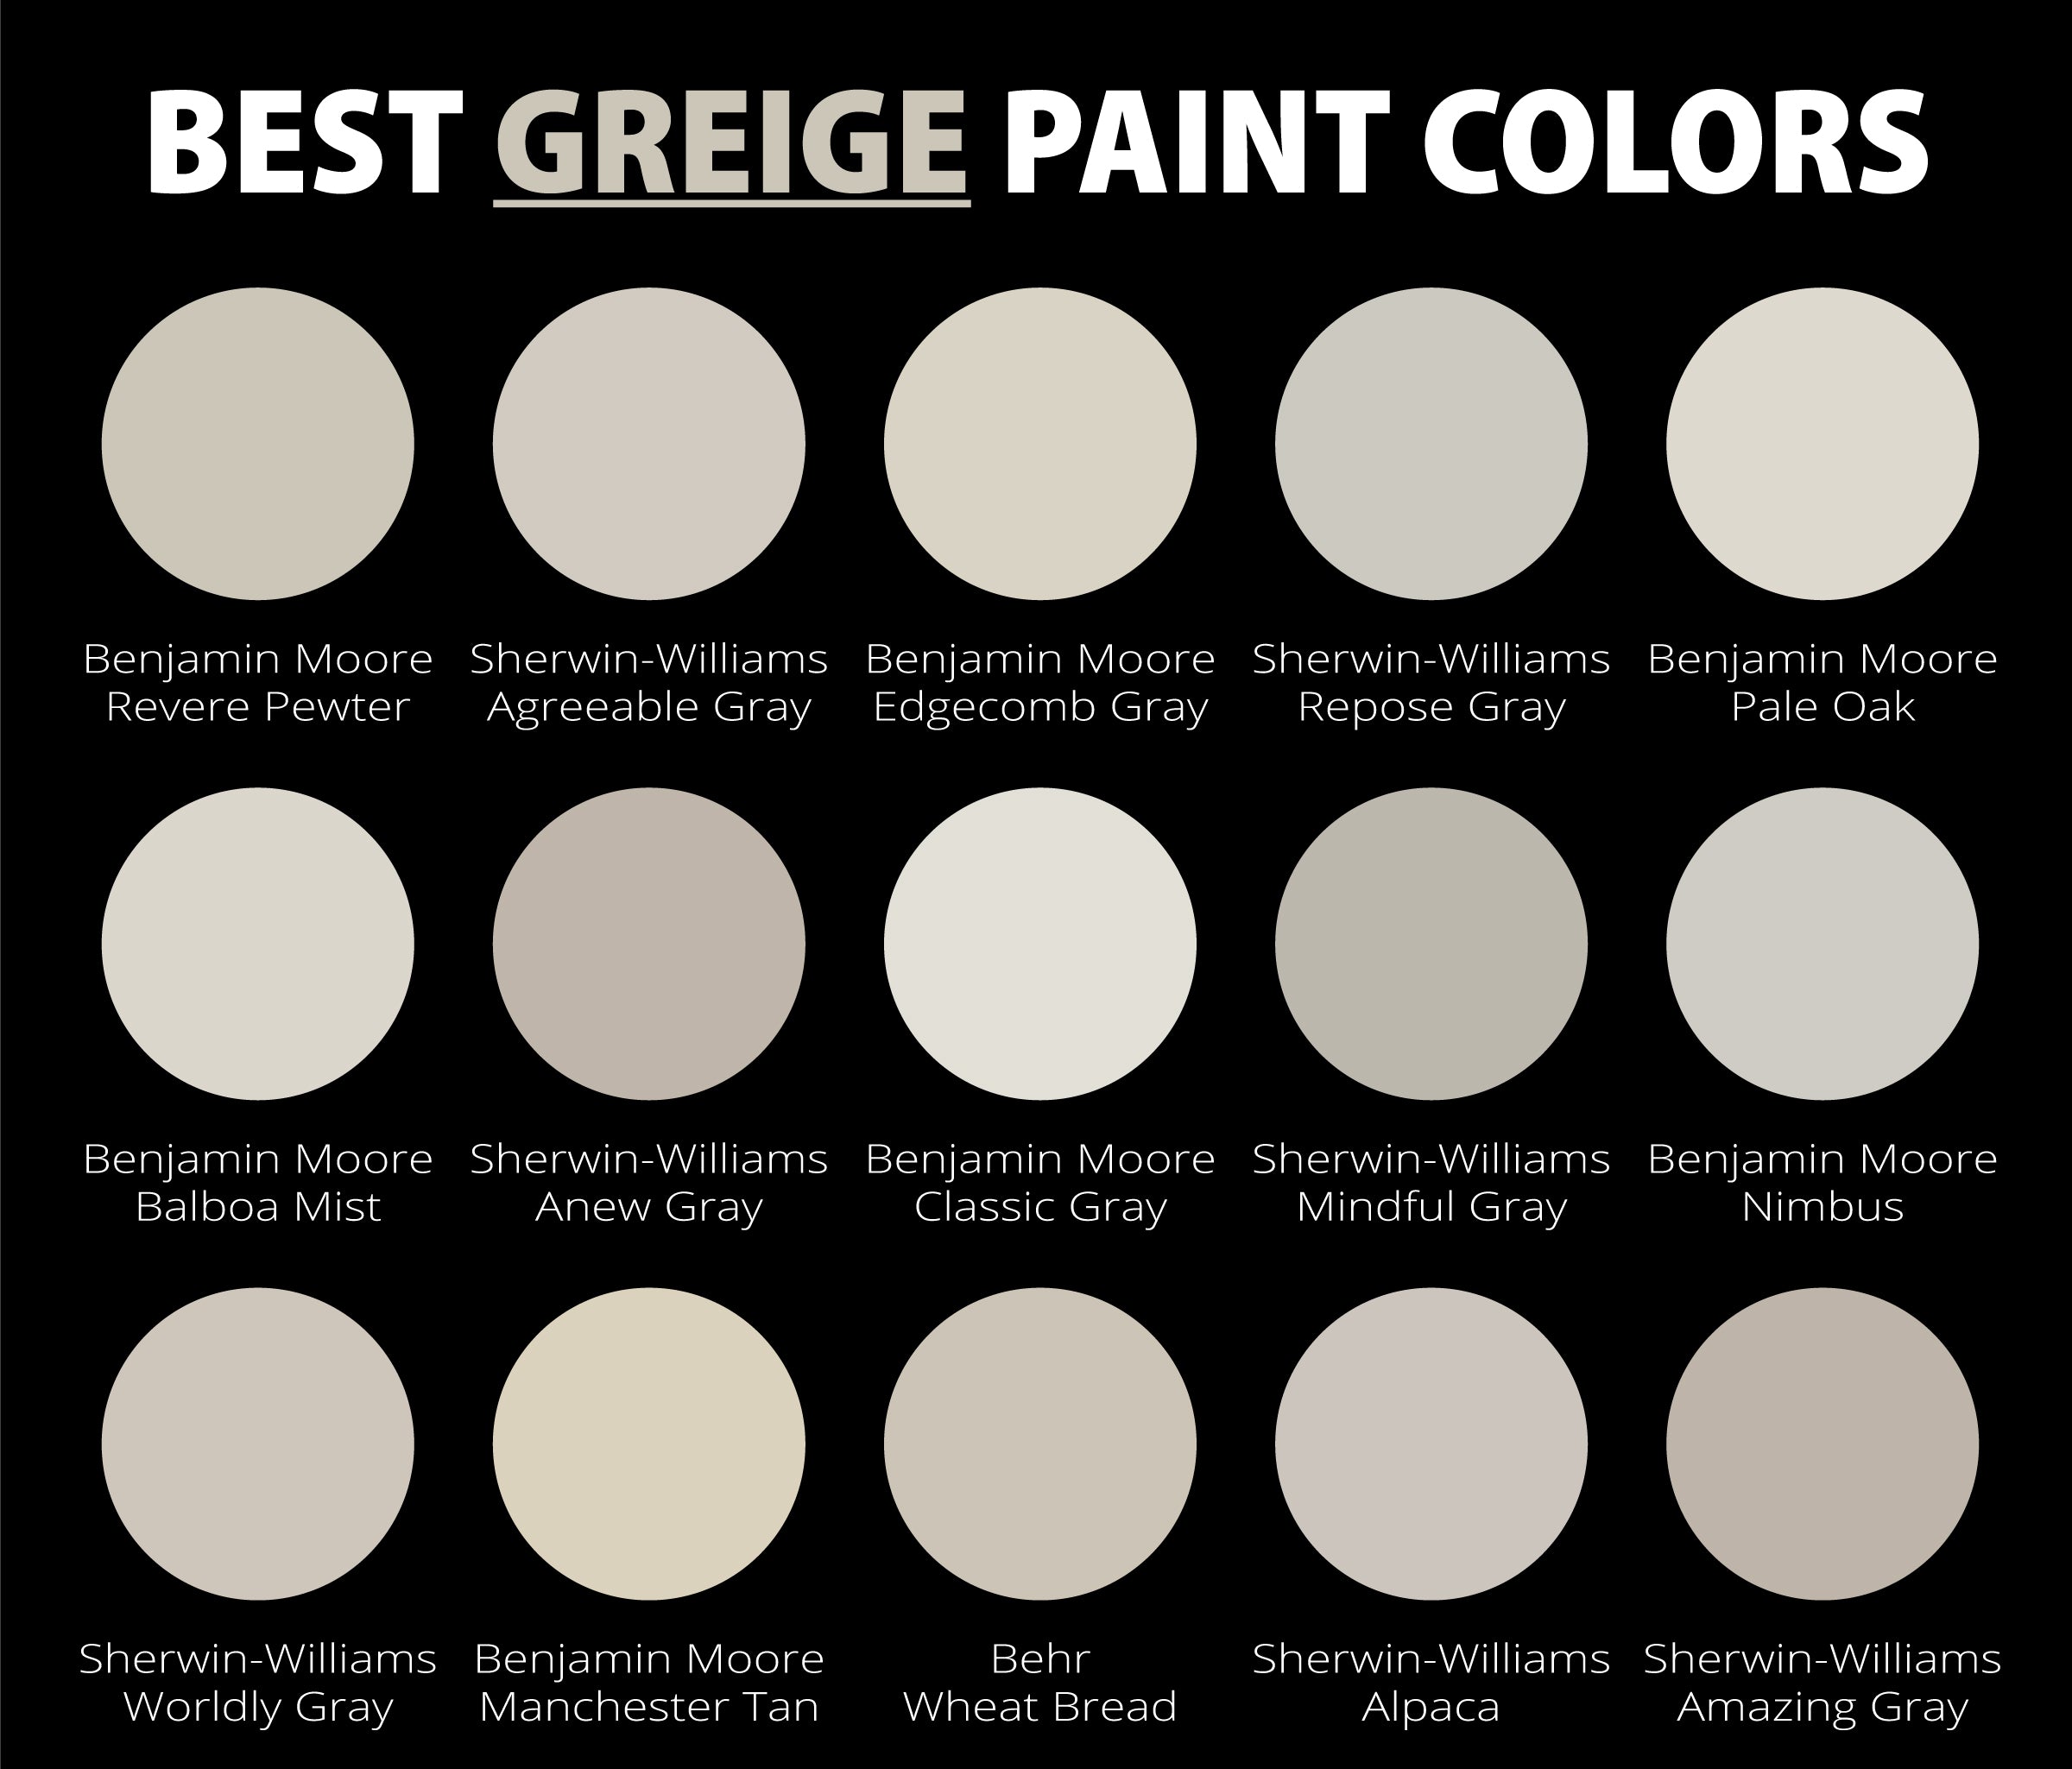 Best-Greige-Paint-Colors-Dark-BG